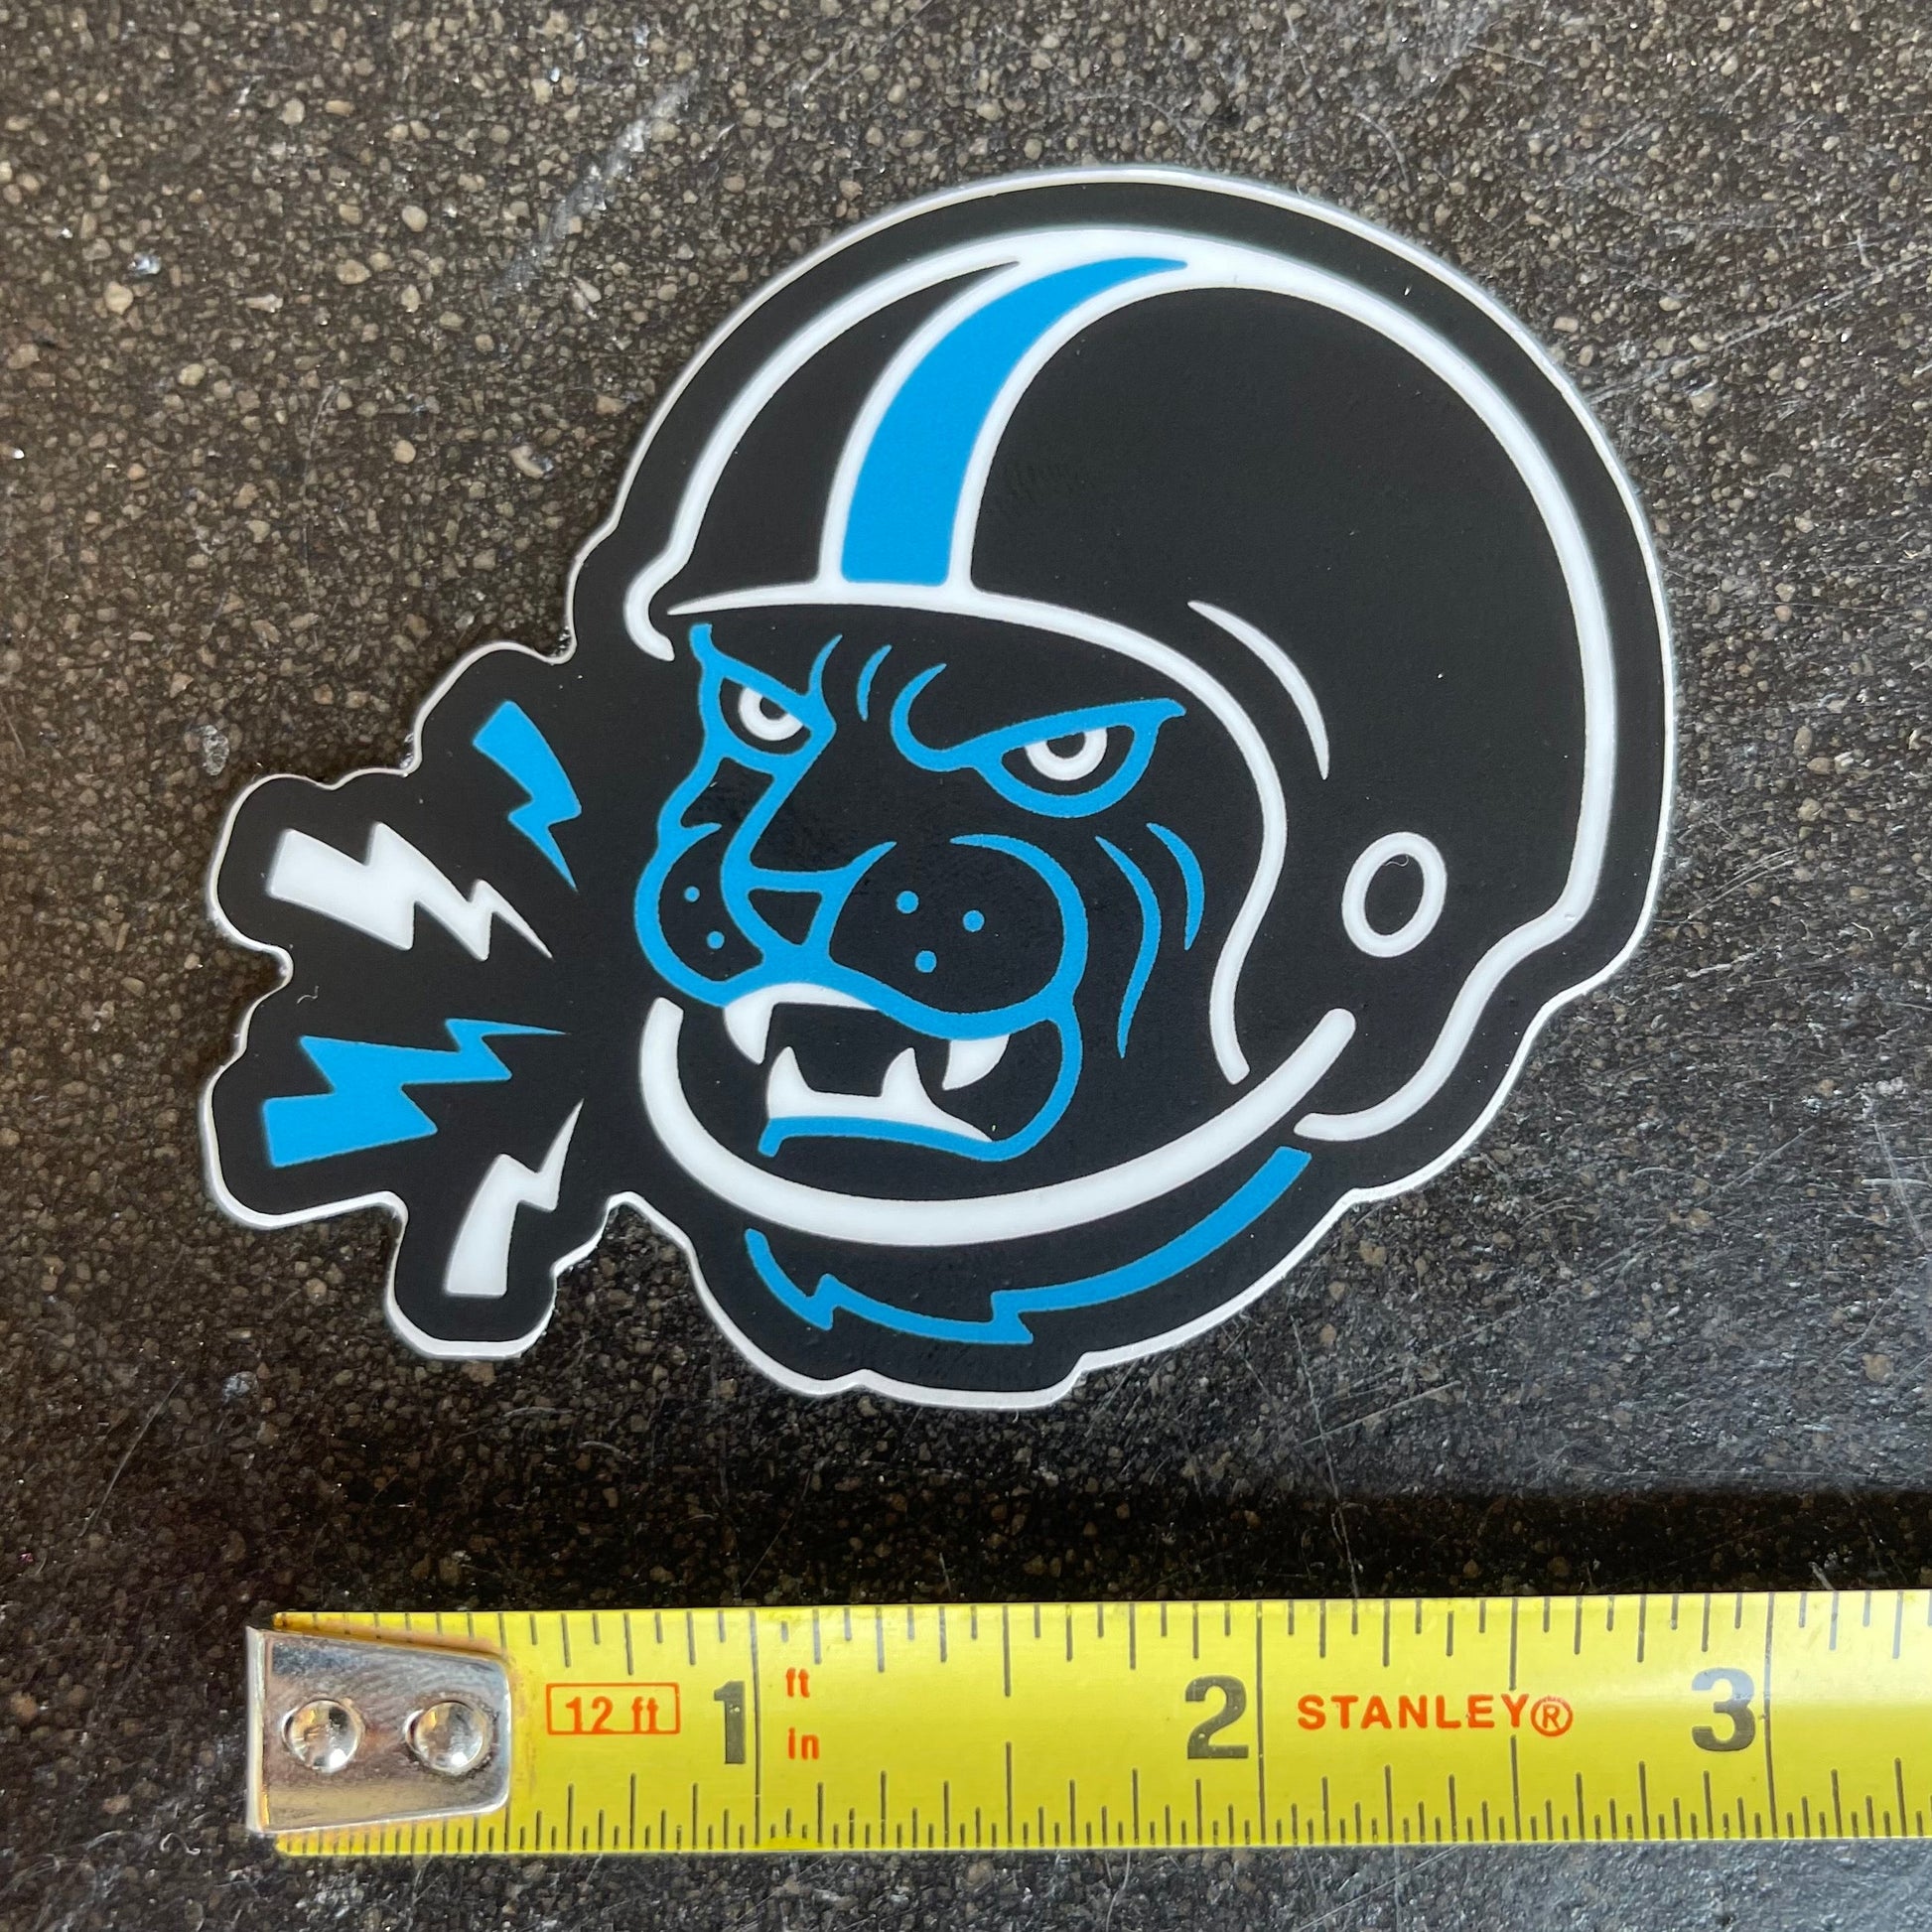 Panthers sticker